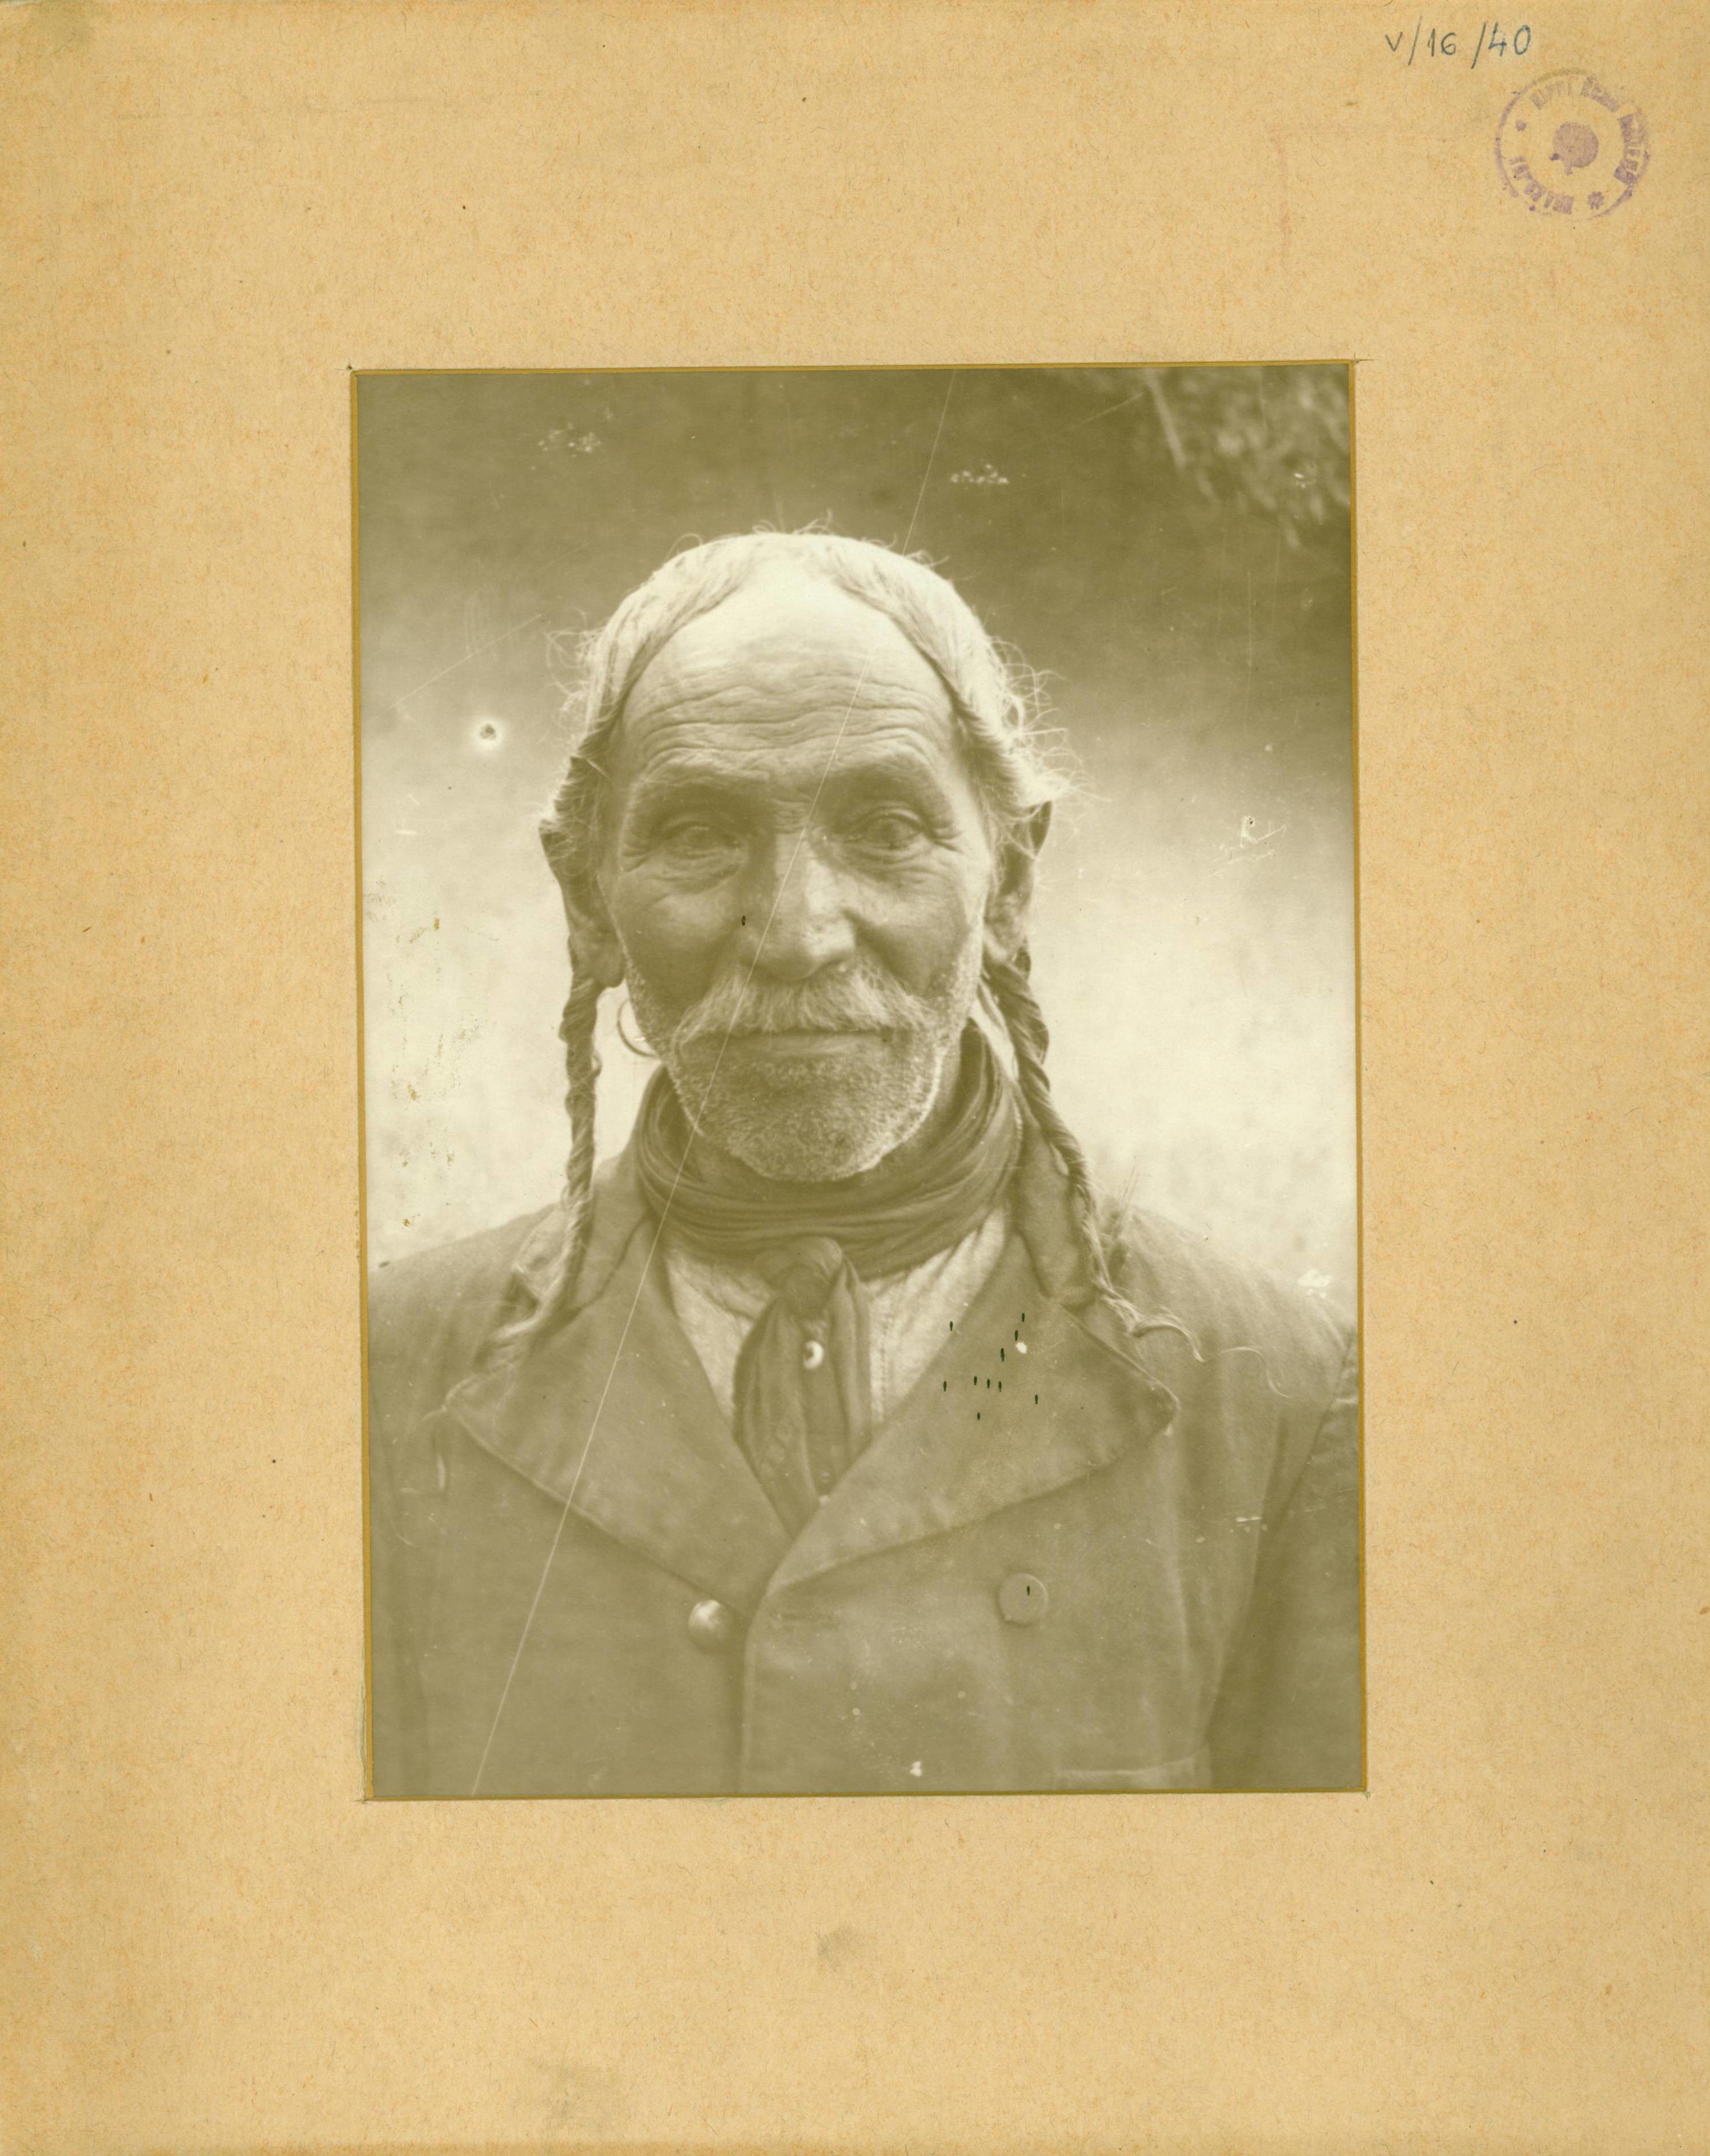 Lábodi csimbókos férfi (Rippl-Rónai Múzeum RR-F)